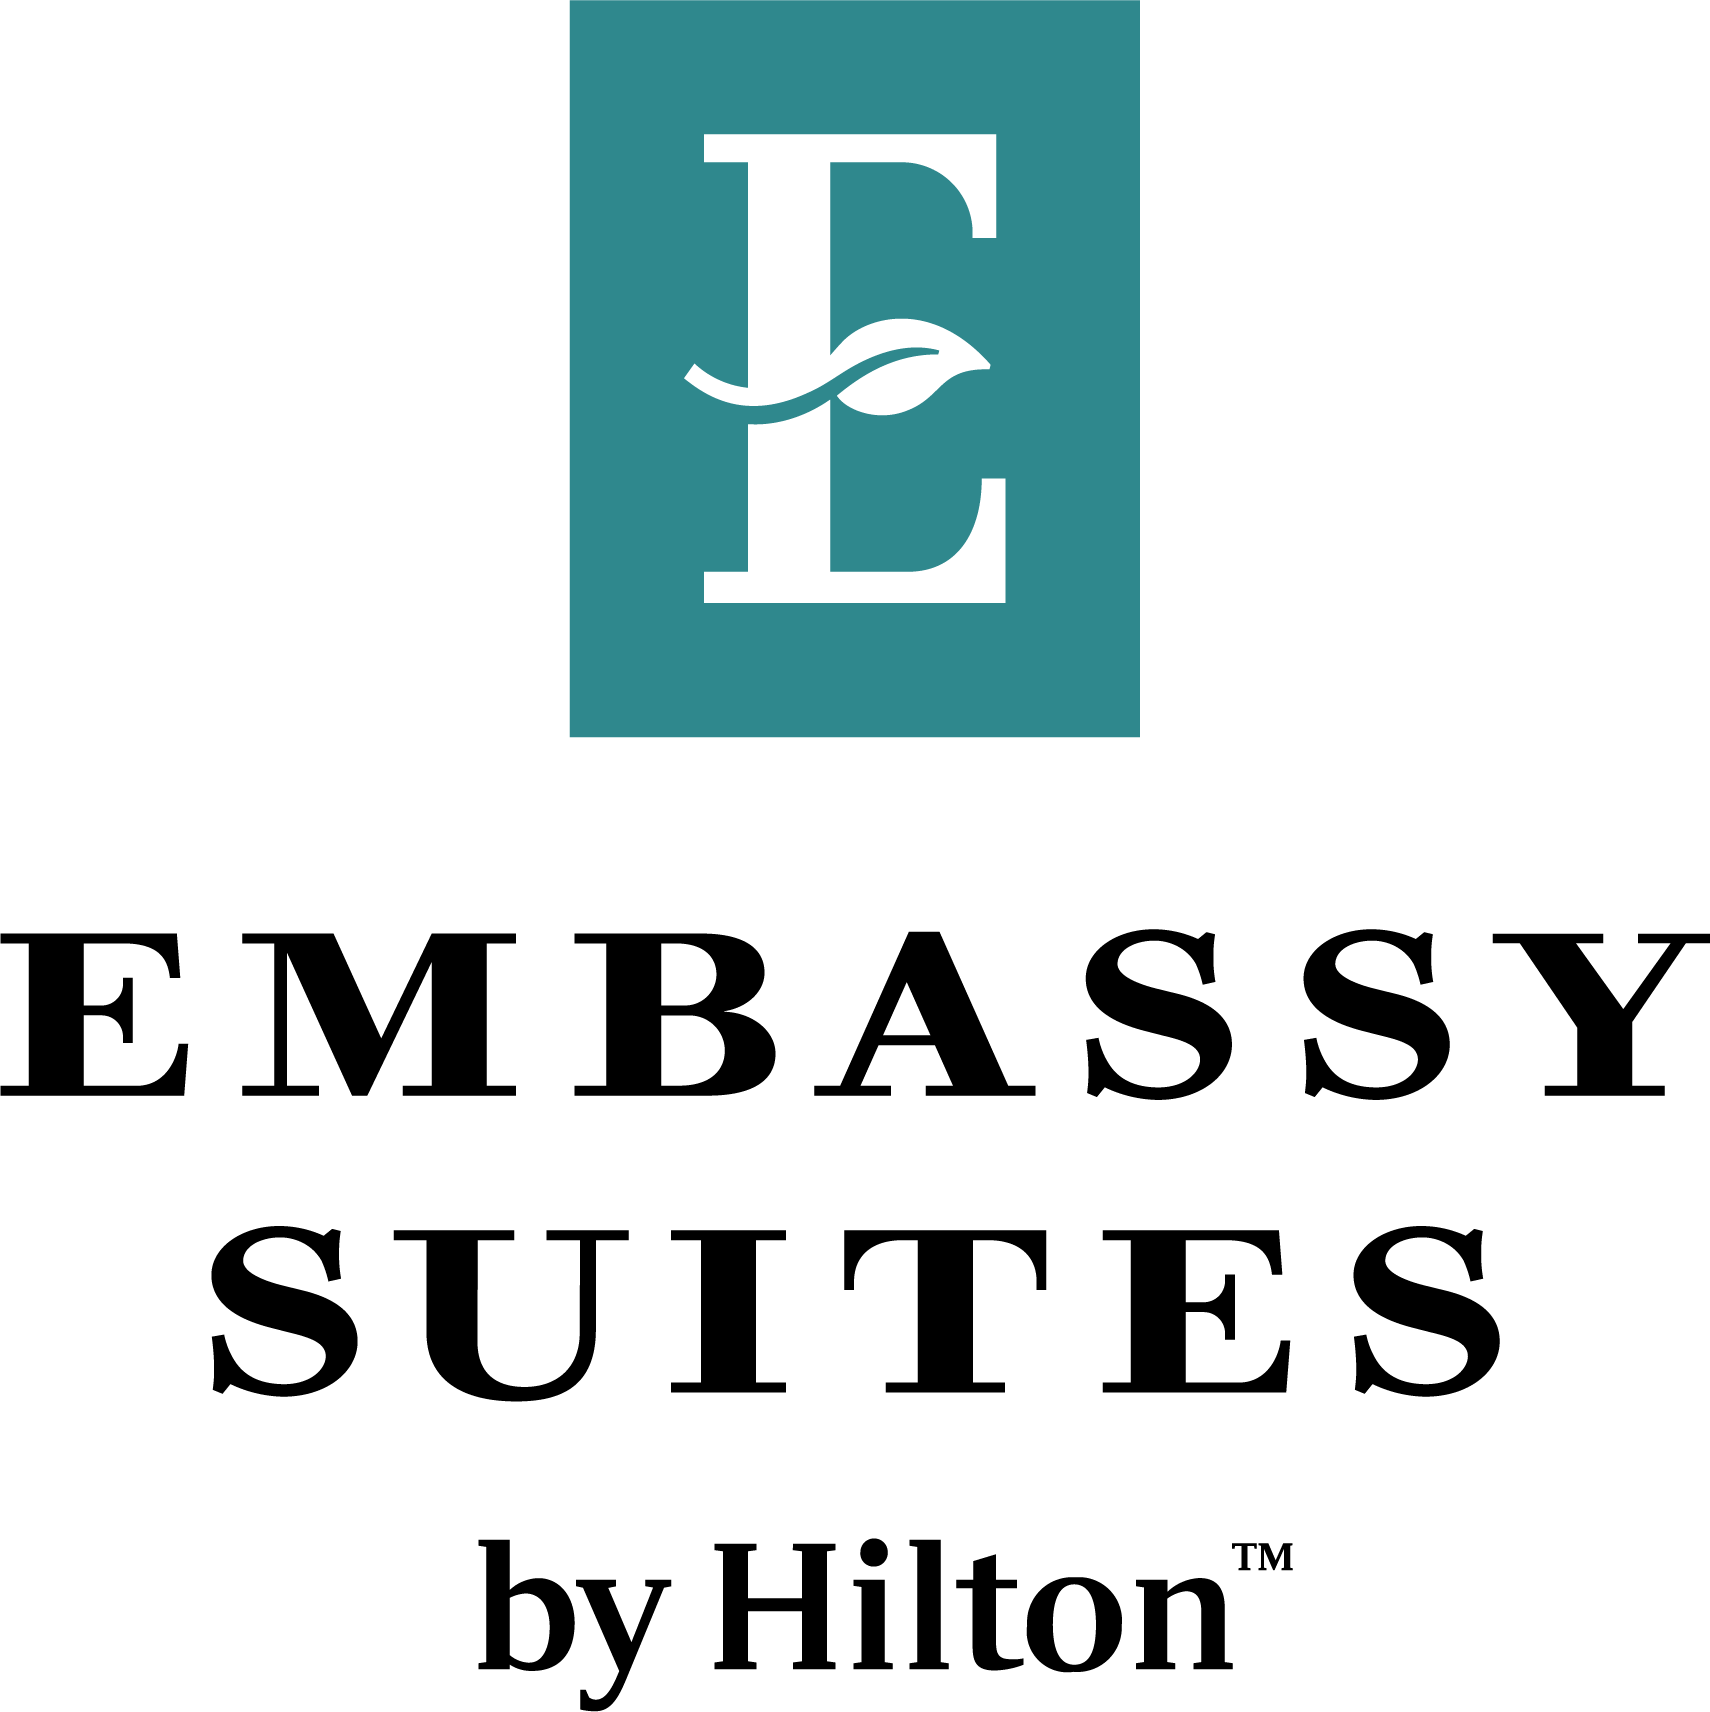 Embassy Suites Logo - Color